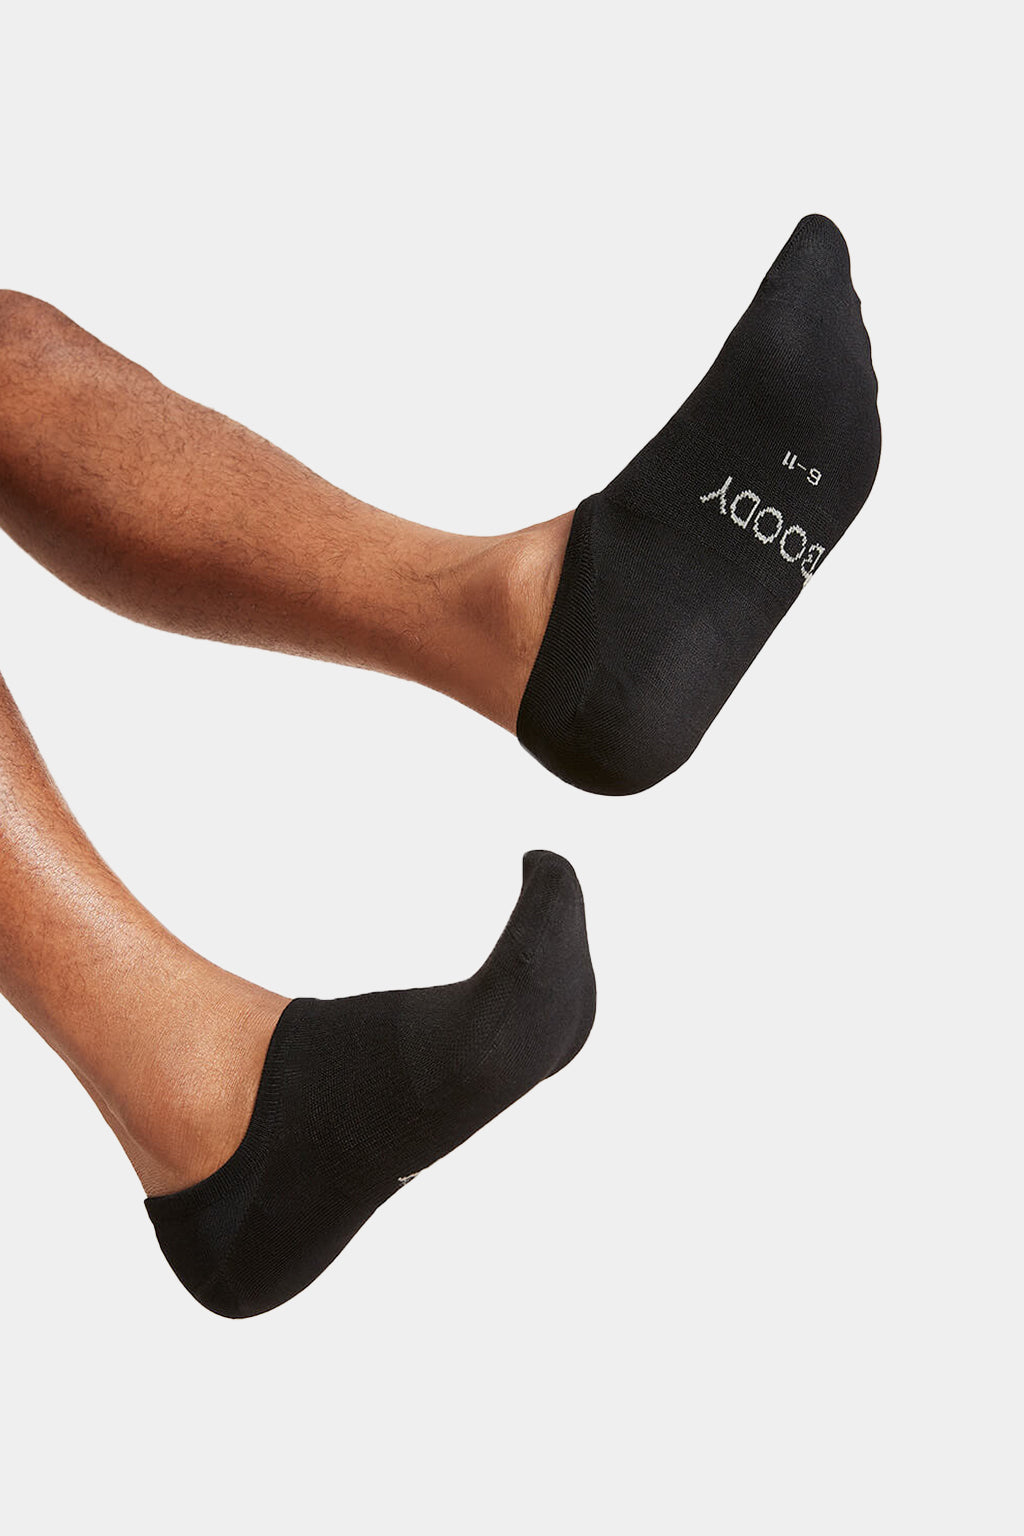 Boody - Men's Everyday Hidden Socks (Pairs of Three)